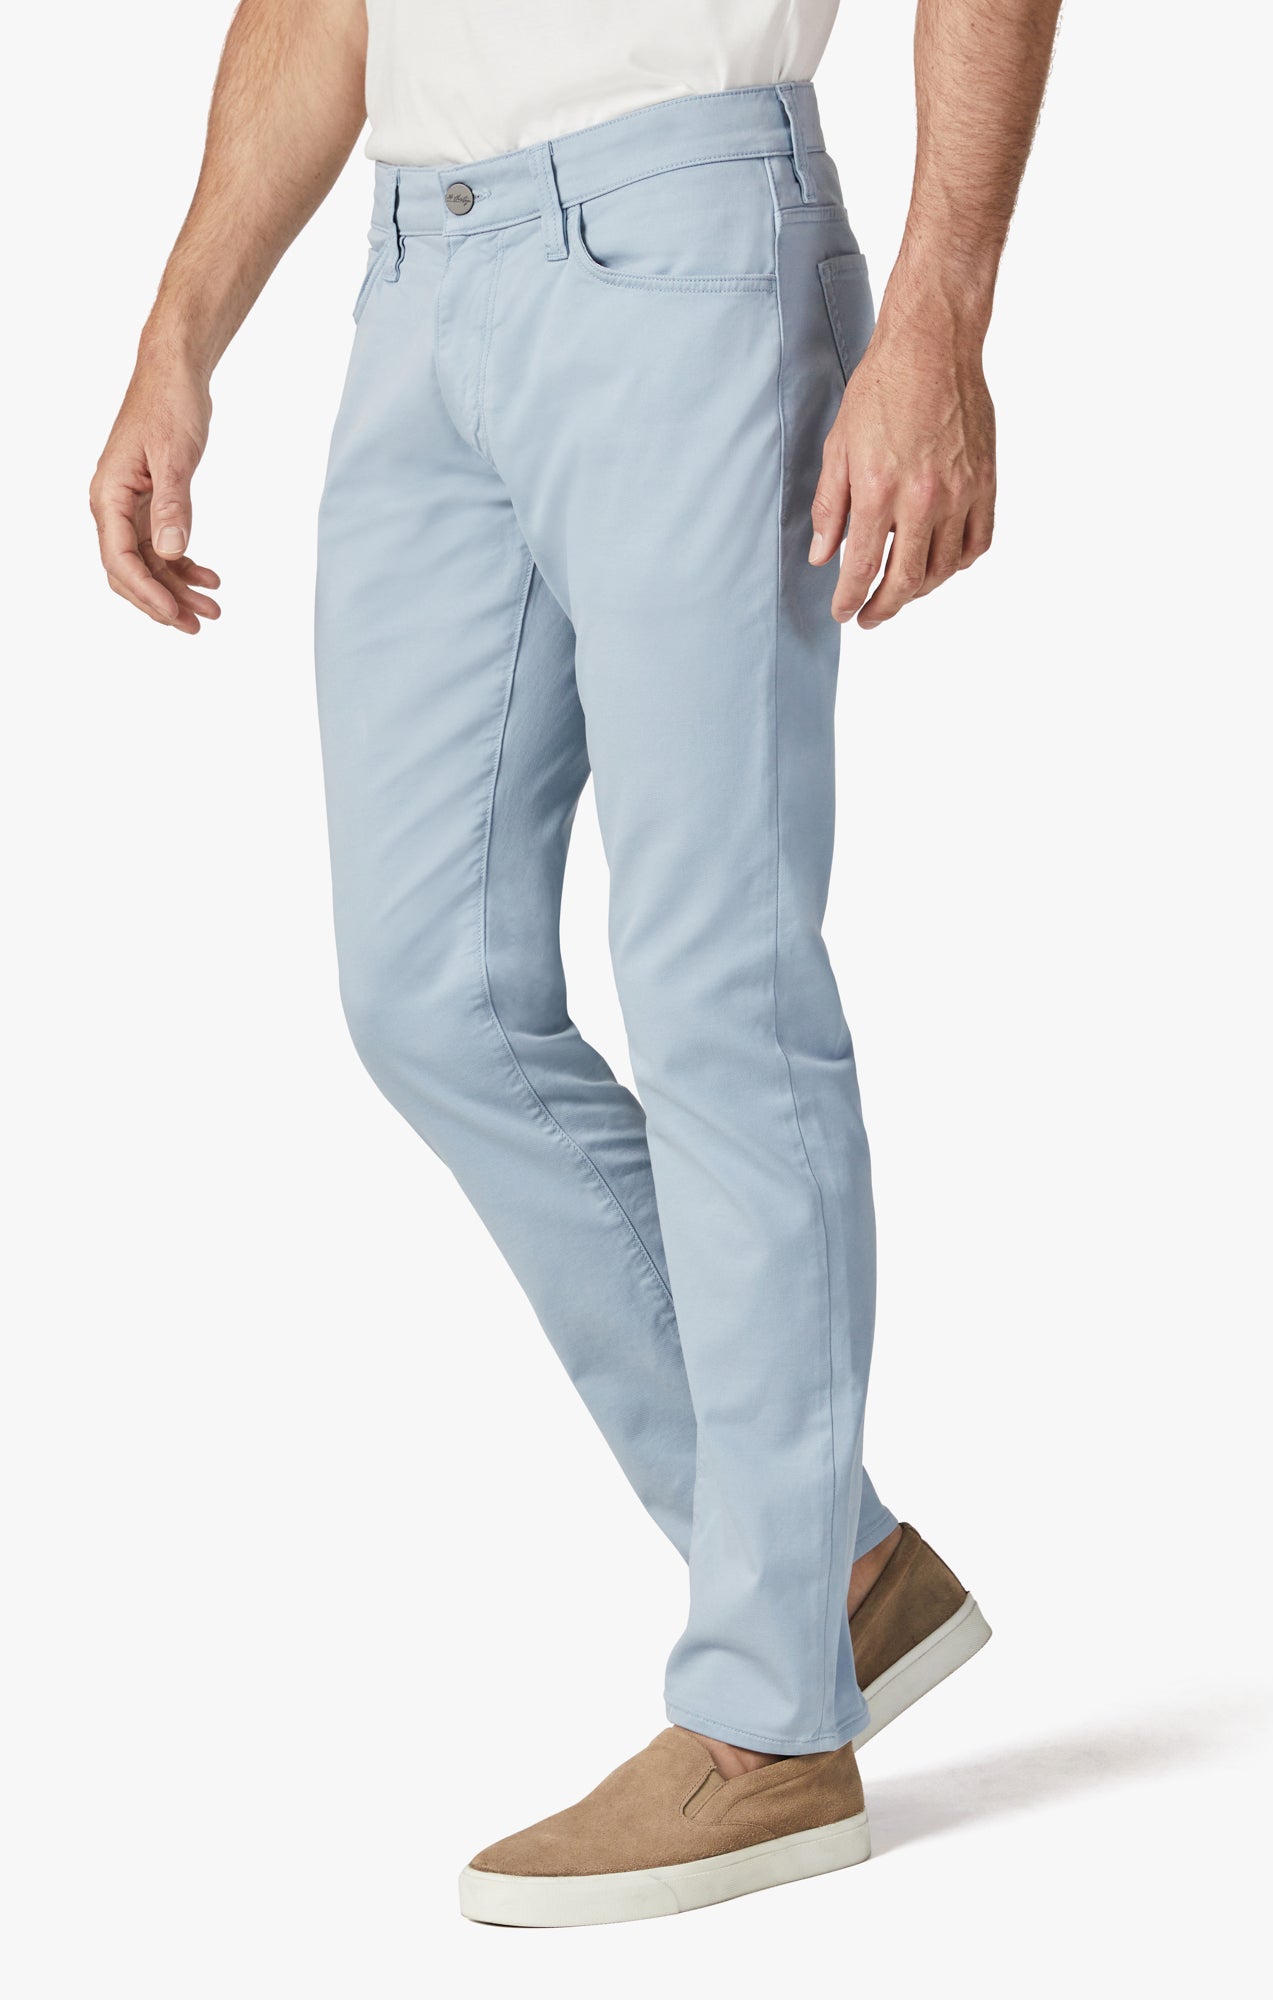 Cool Slim Leg Pants in Faded Denim Summer CoolMax Image 3